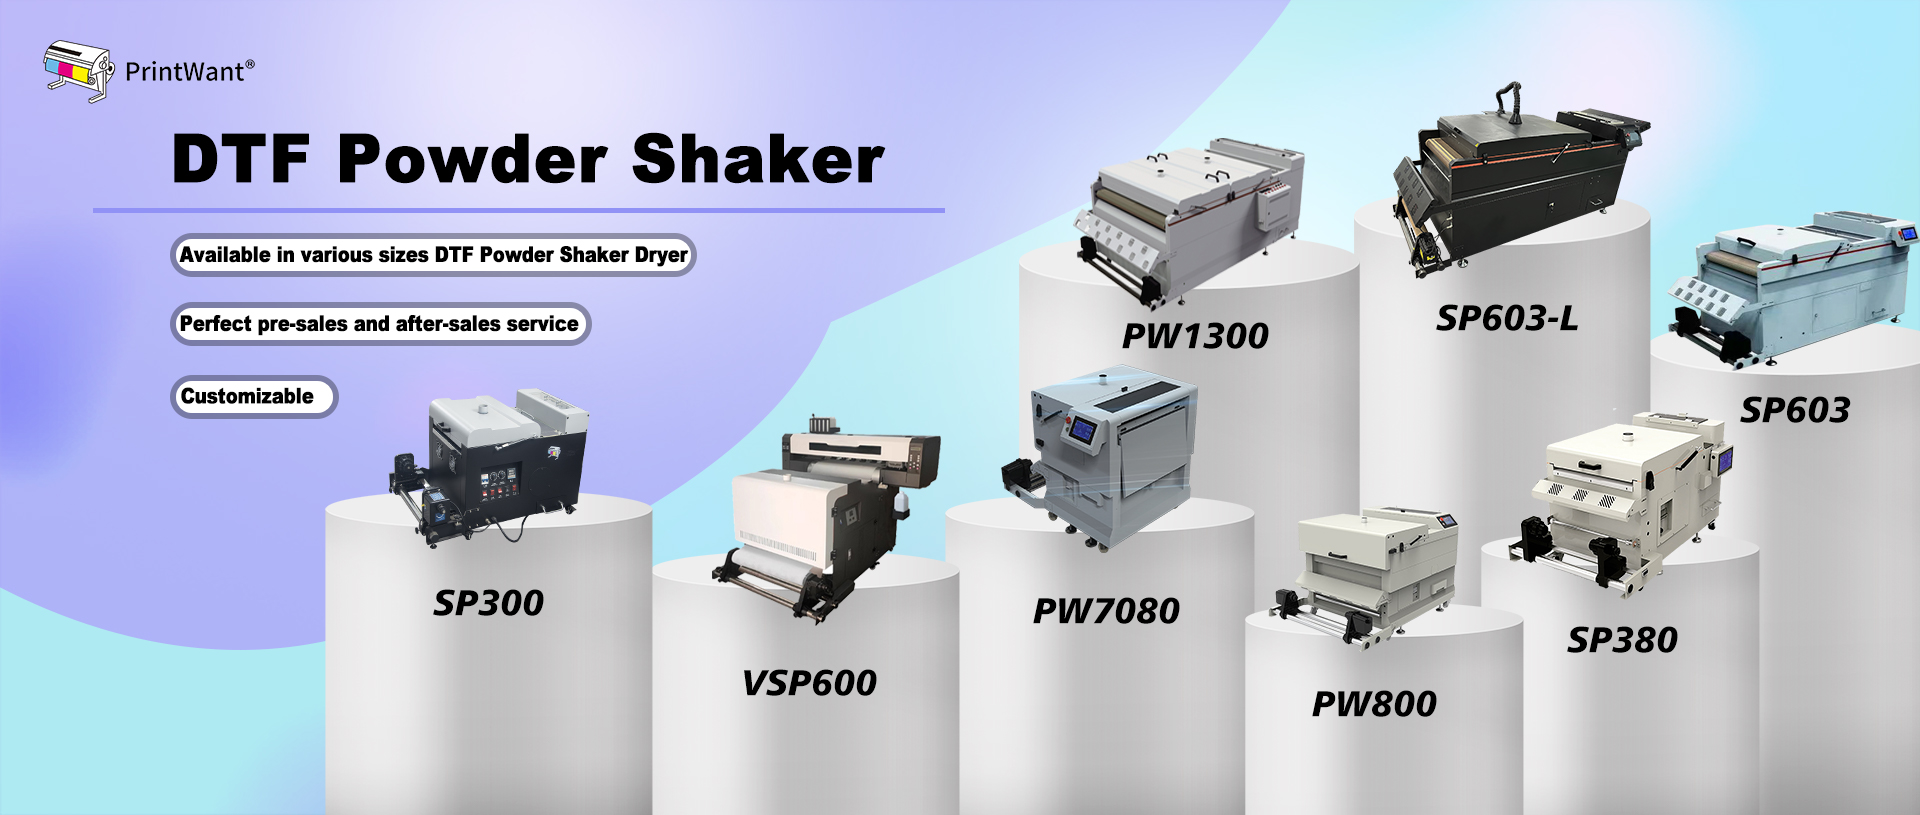 DTF Powder Shaker